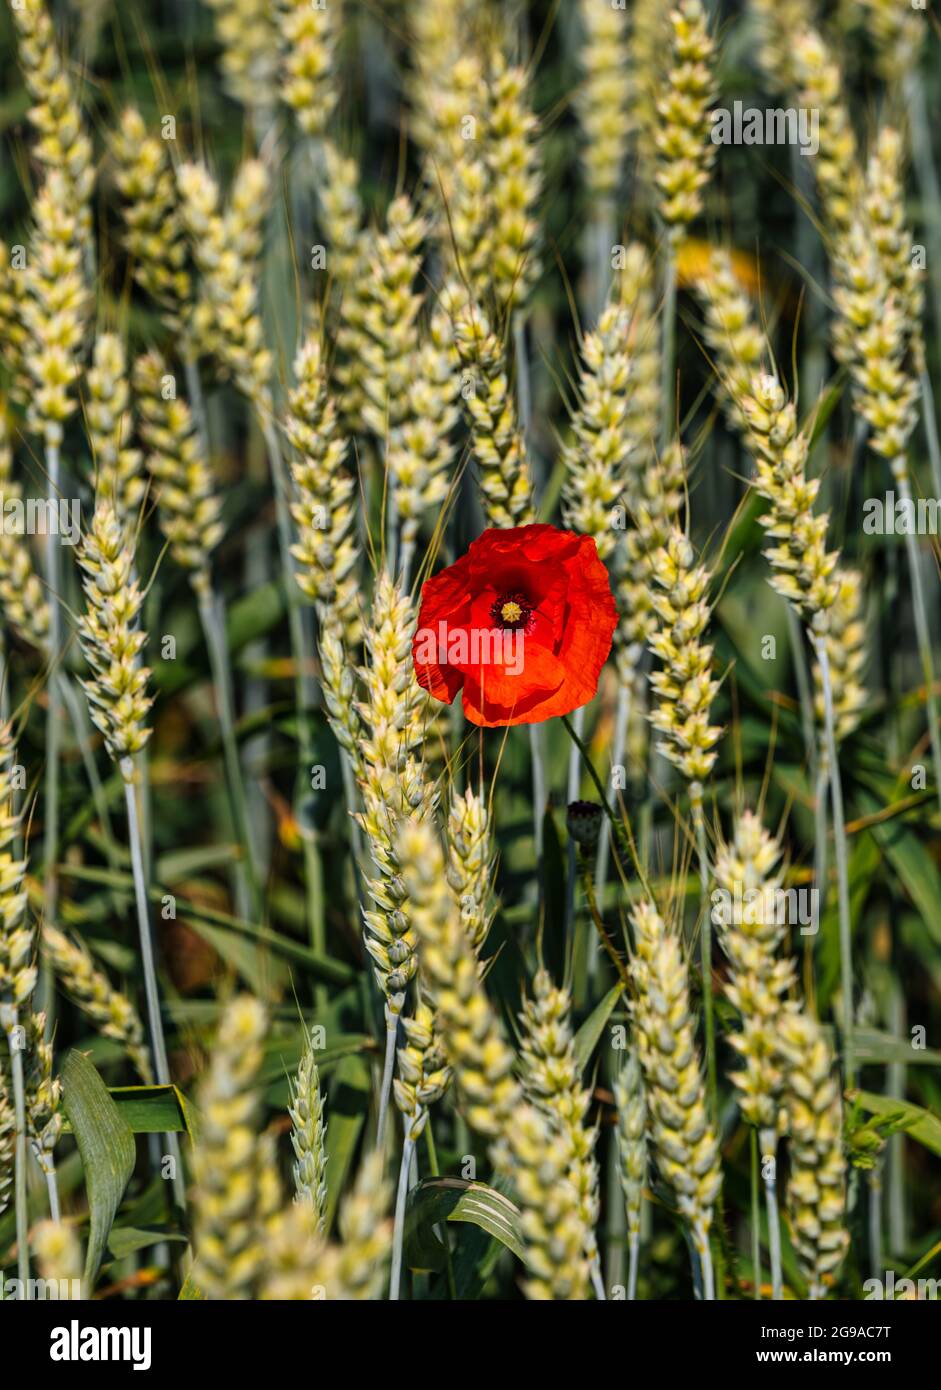 Single corn rose red poppy growing among wheat stalks in a crop field in Summer sunshine, East Lothian, Scotland, UK Stock Photo